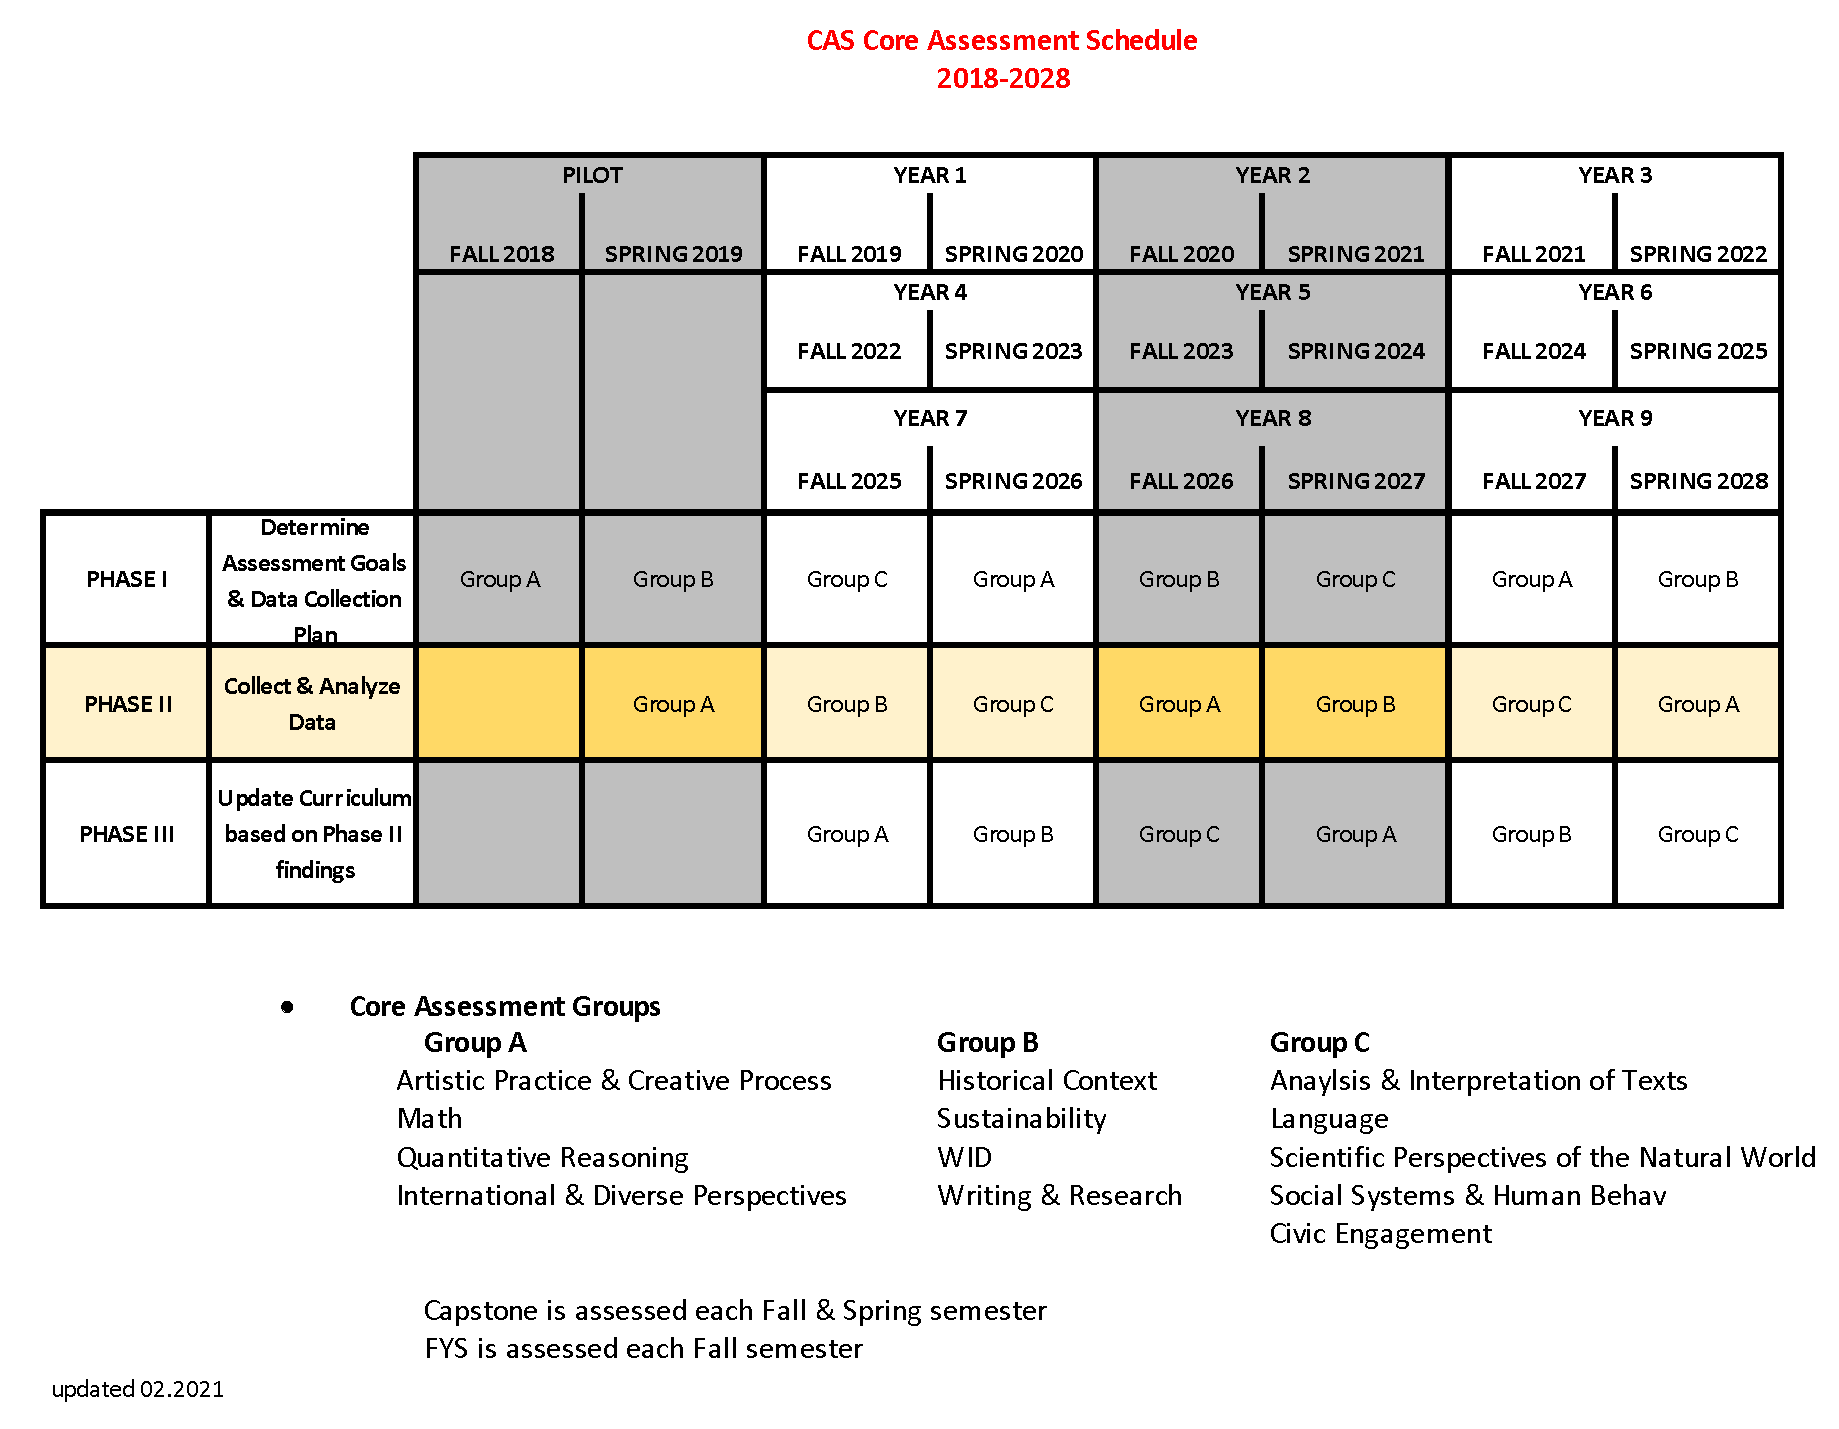 CAS Core Assessment Schedule 2018-2028